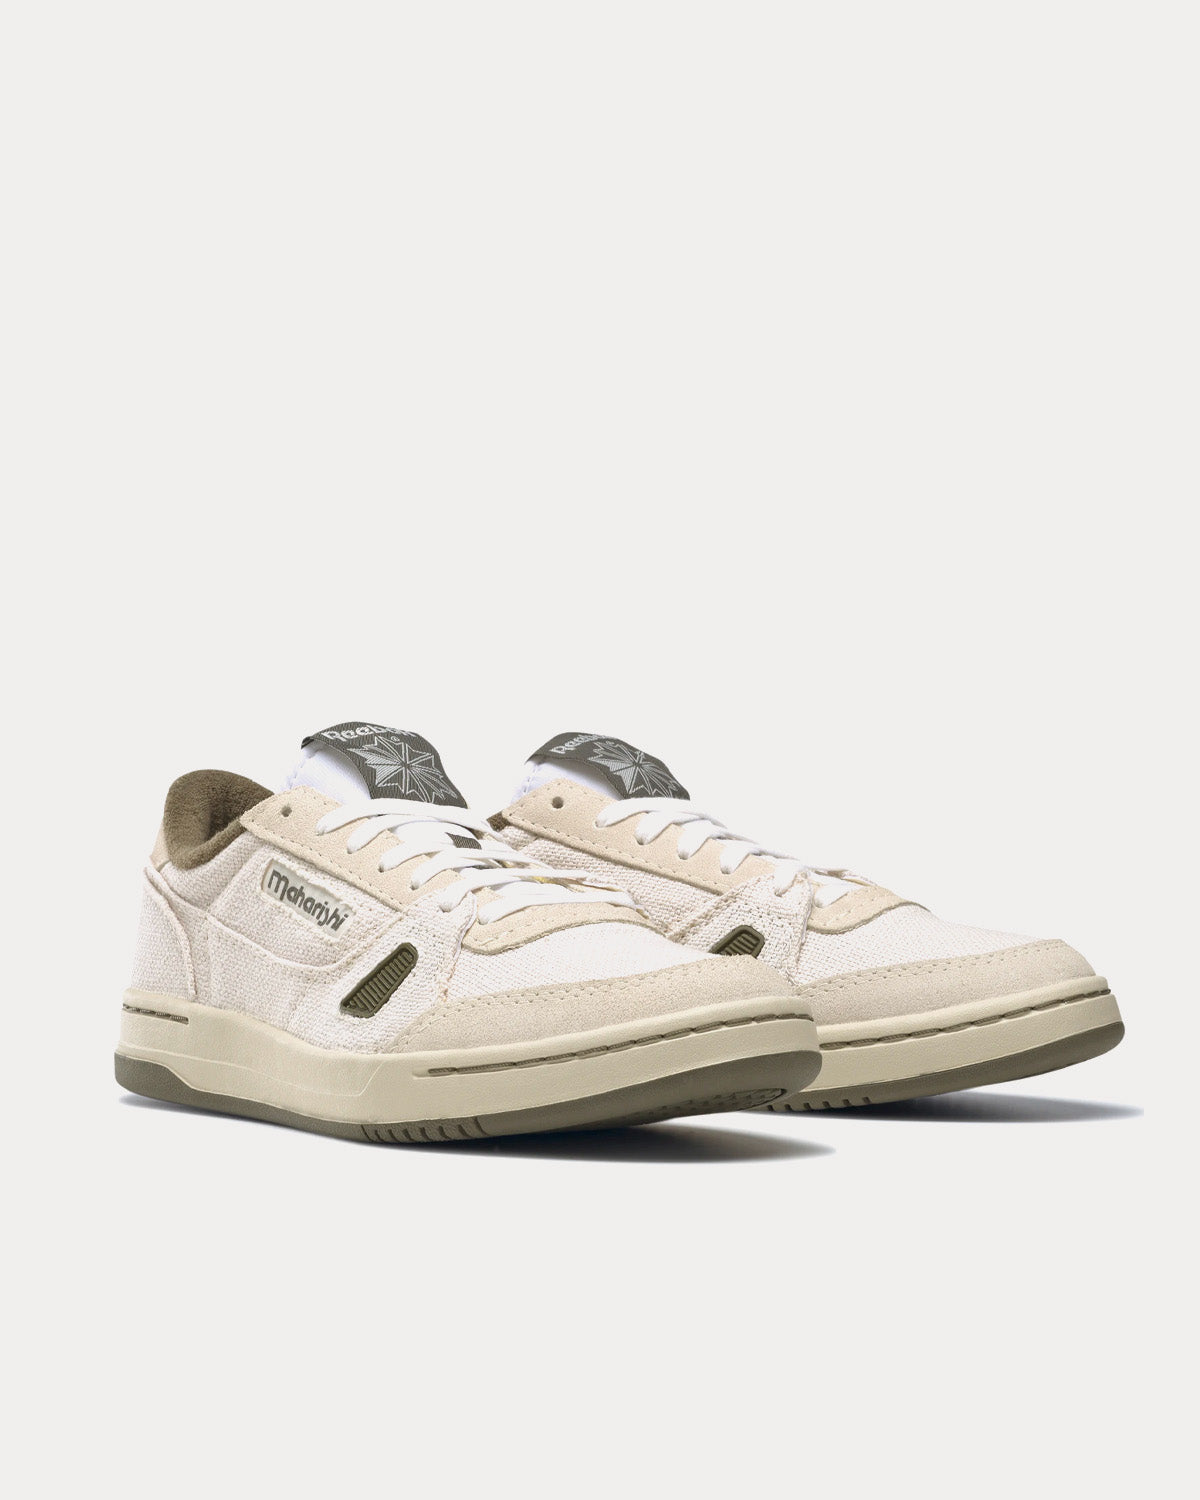 Reebok x Maharishi - LT Court Cloud White / Alabaster / Army Green Low Top Sneakers